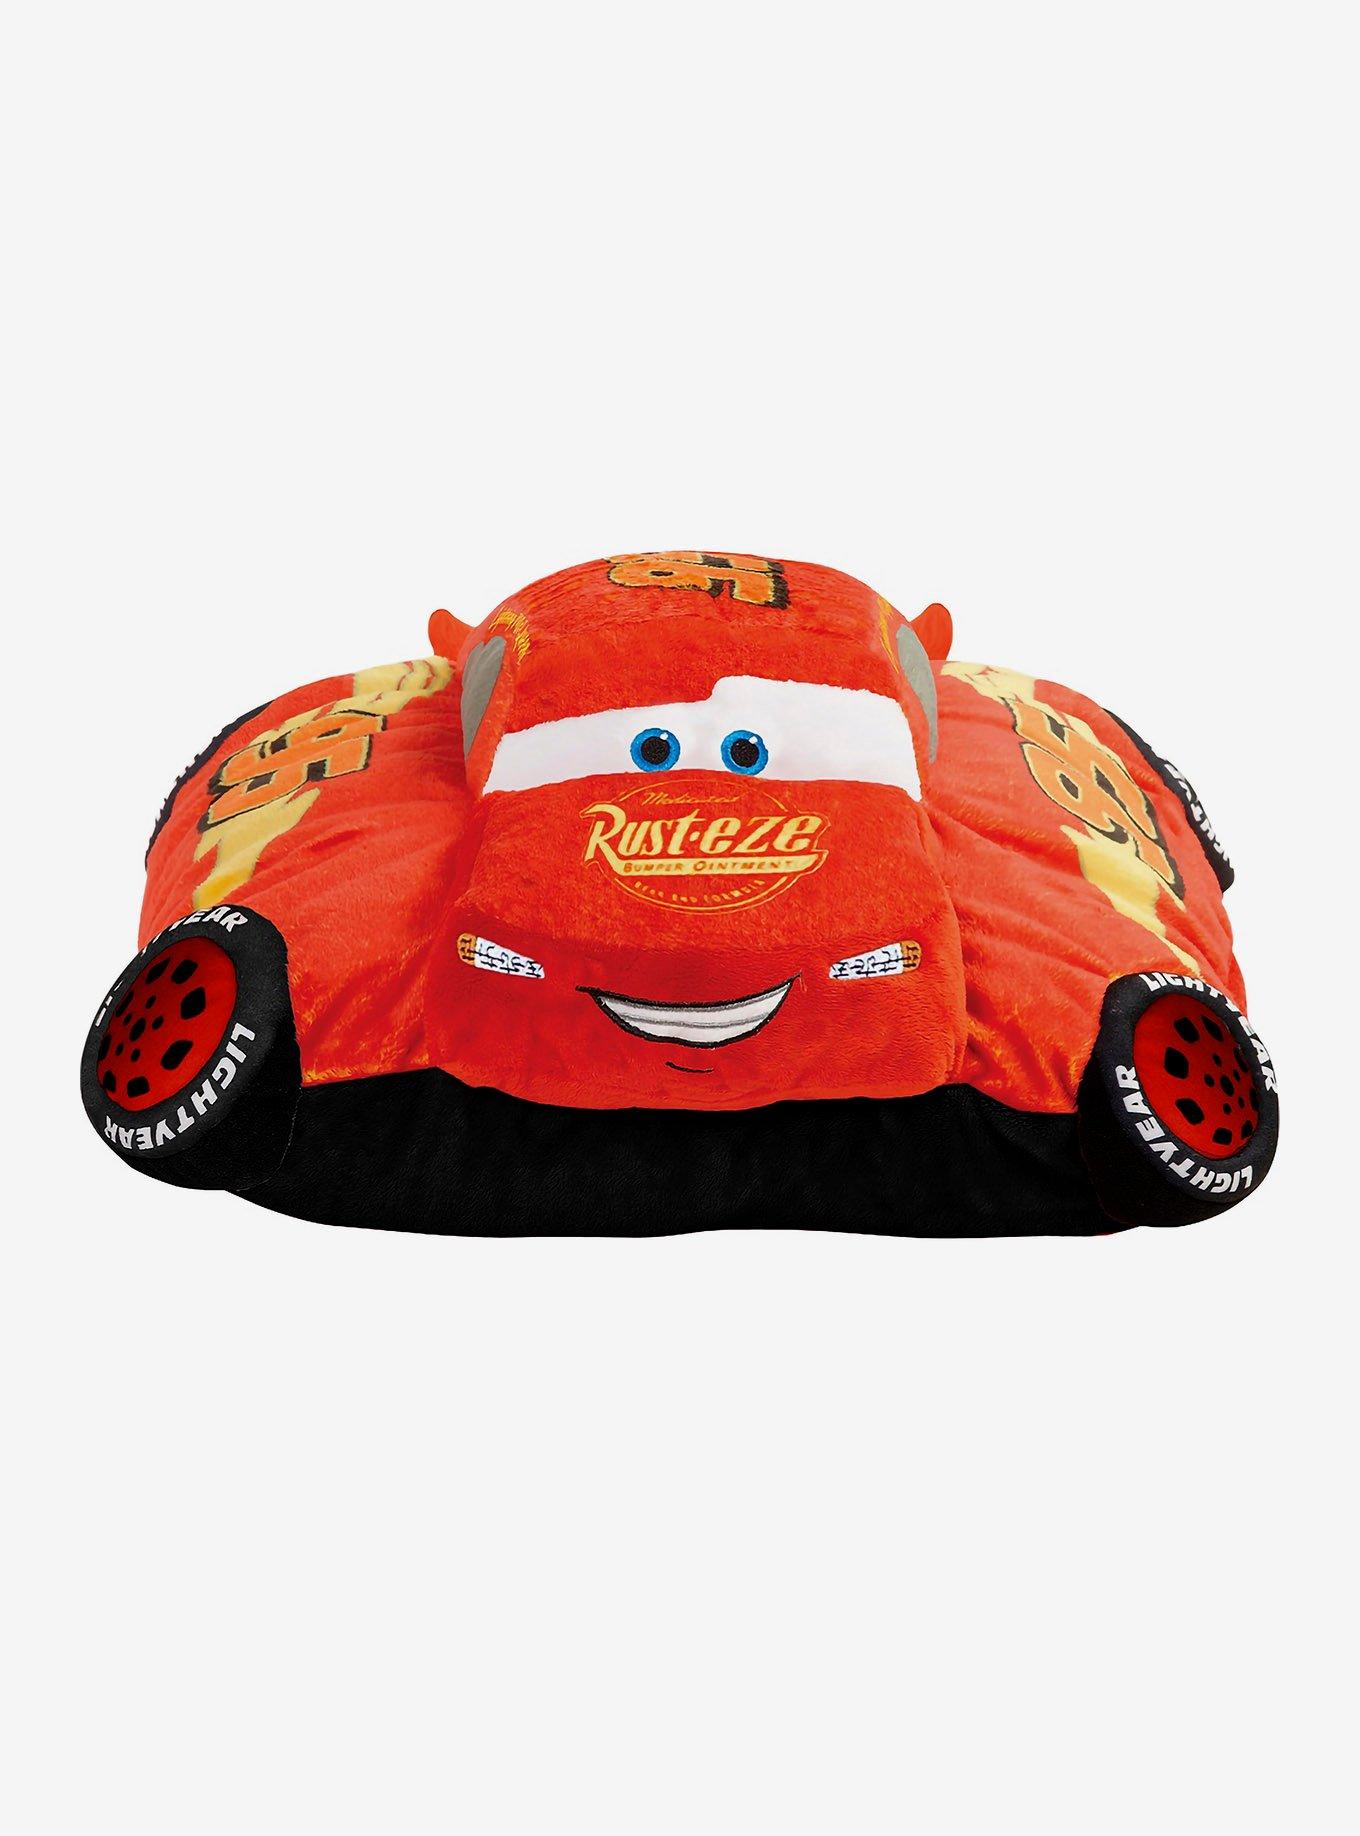 Disney Pixar Cars Pillow Pets Lightning McQueen Plush Toy, , alternate